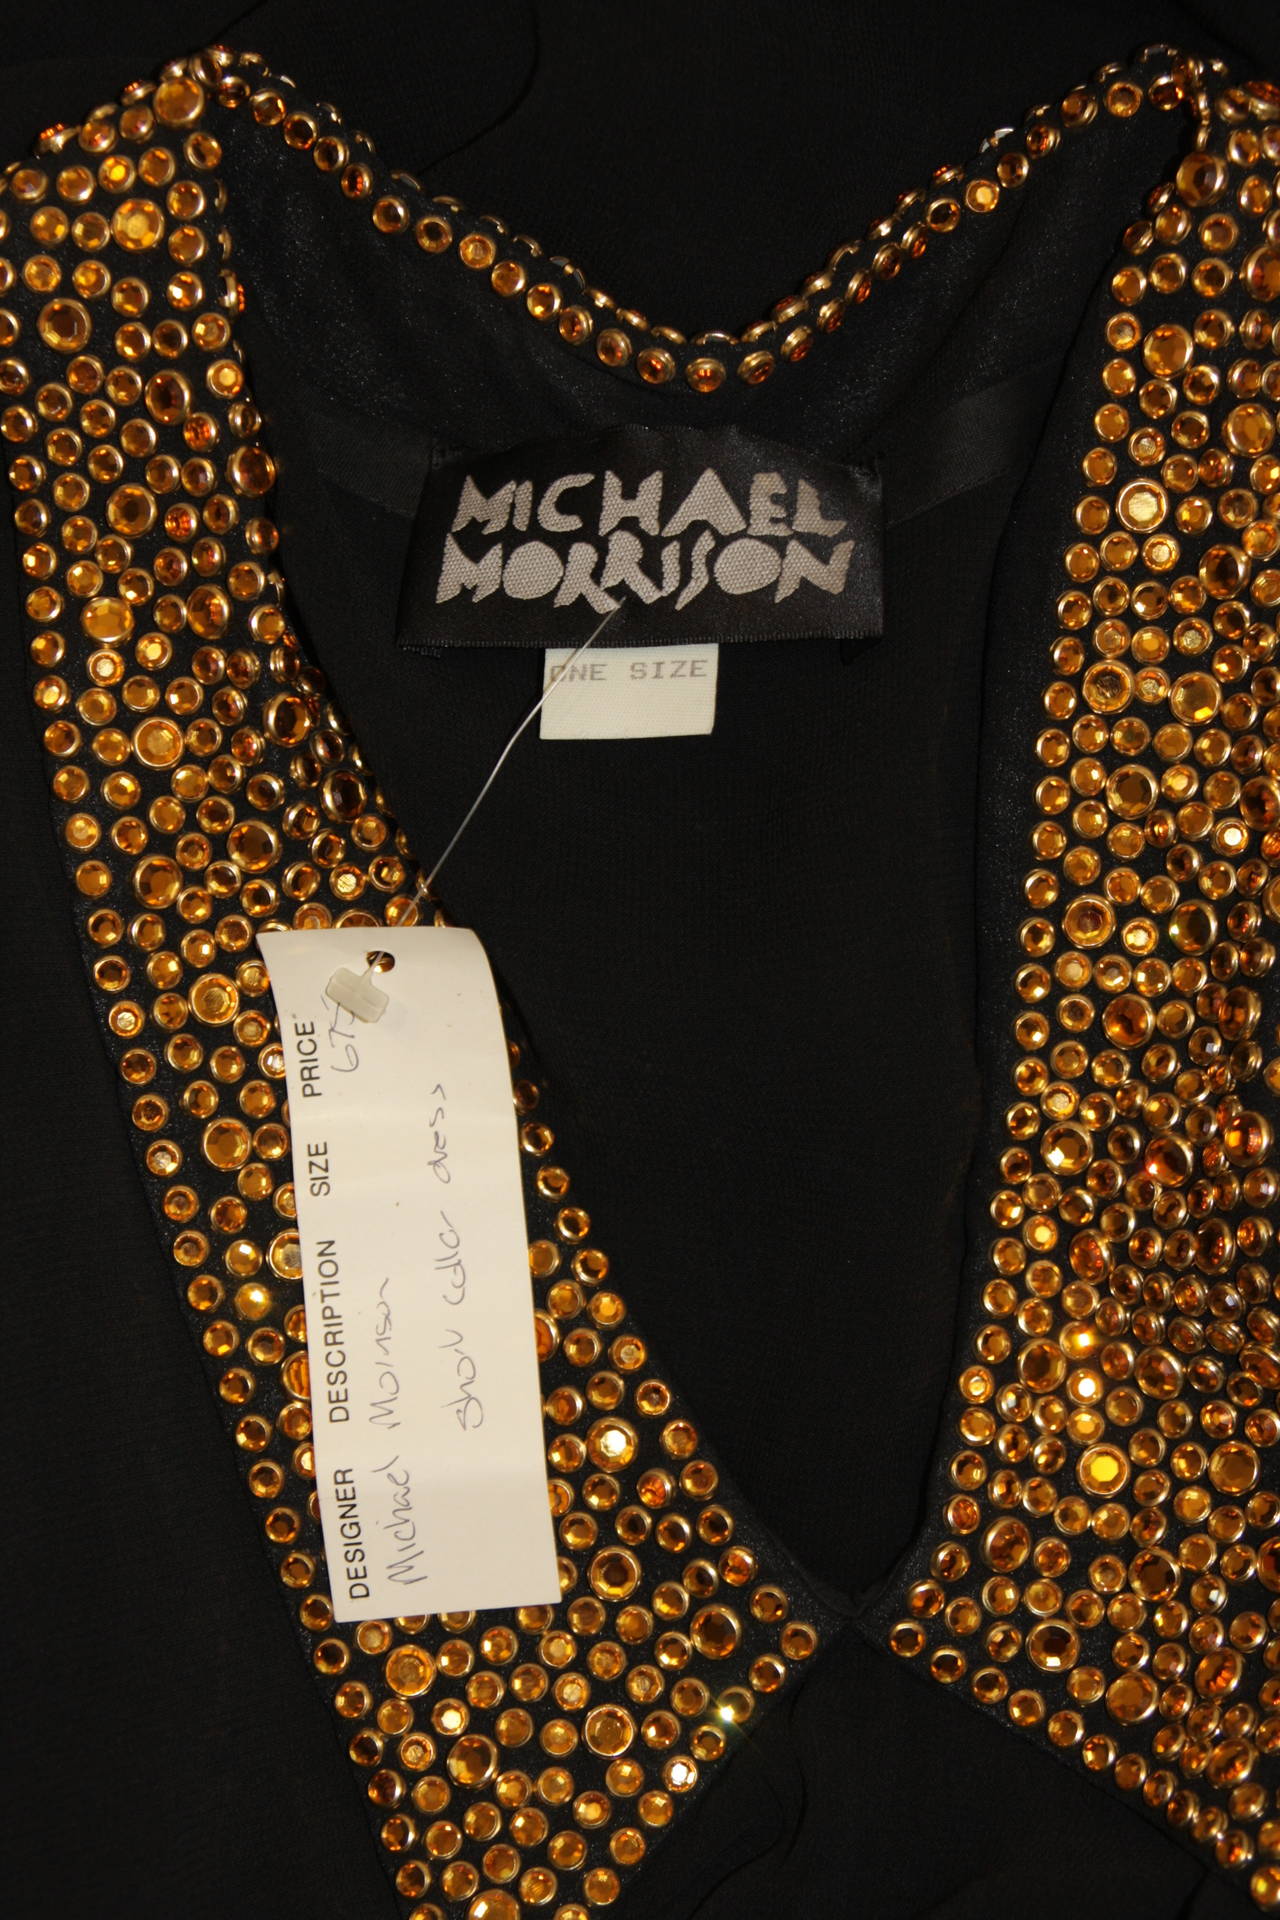 Michael Morrison Sheer Black Shirt Dress with Heavily Embellished Collar 4